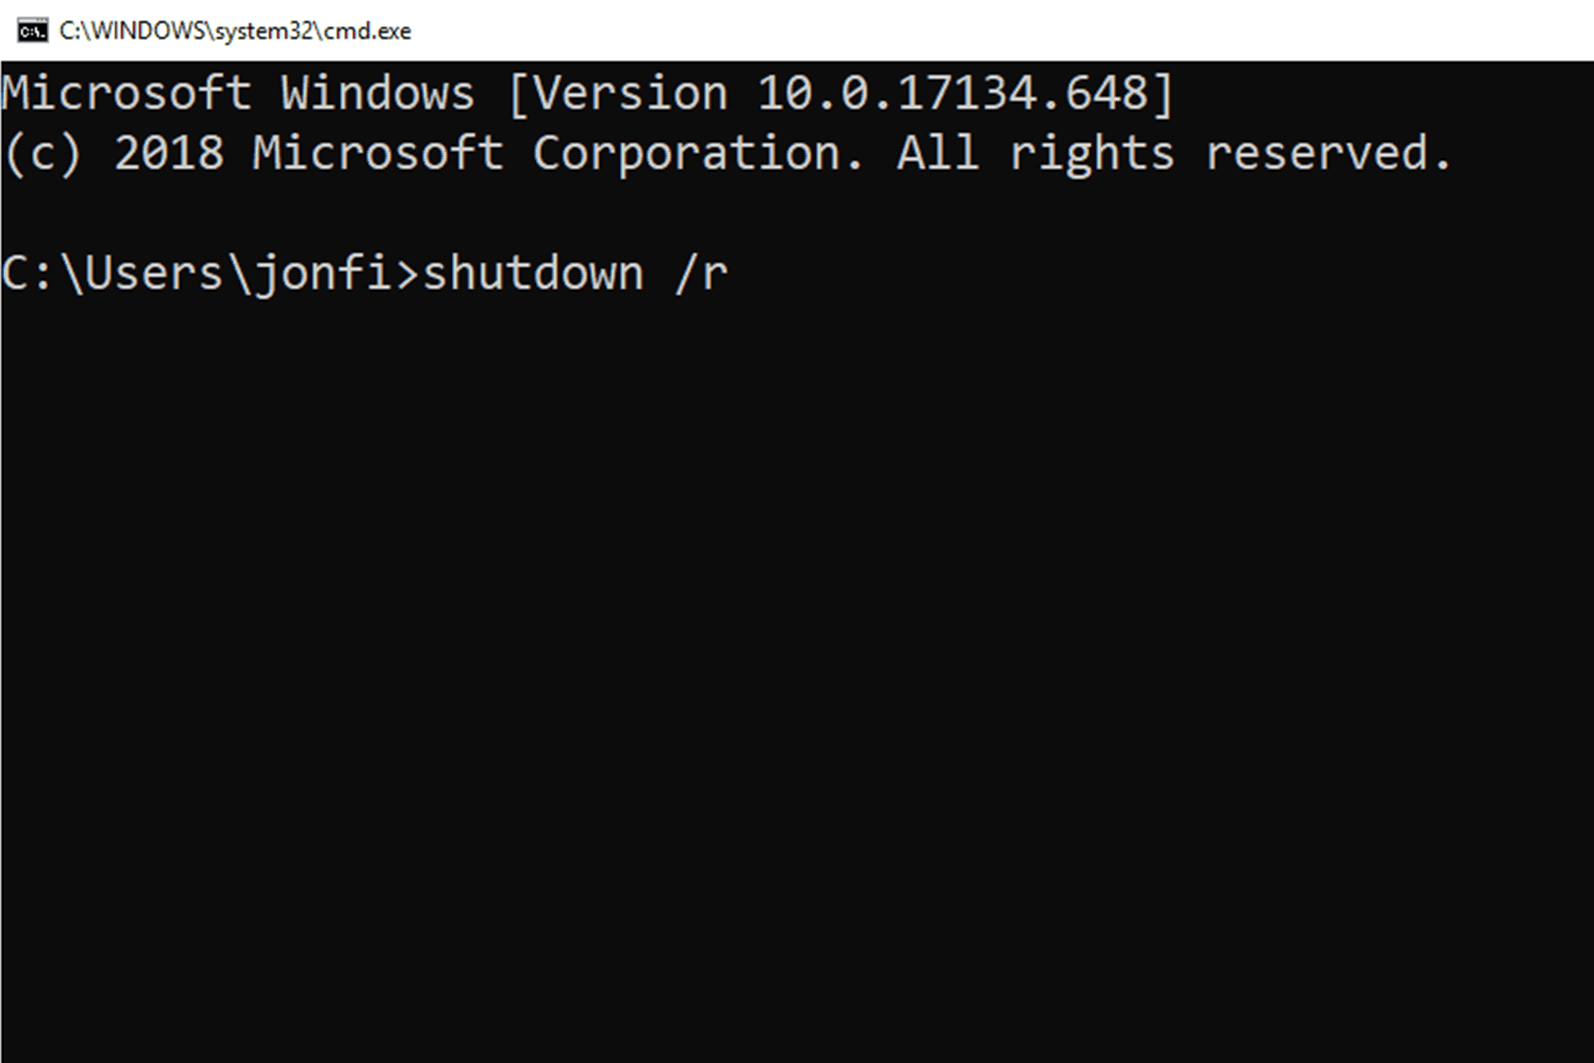 команда shutdown r в Windows 10